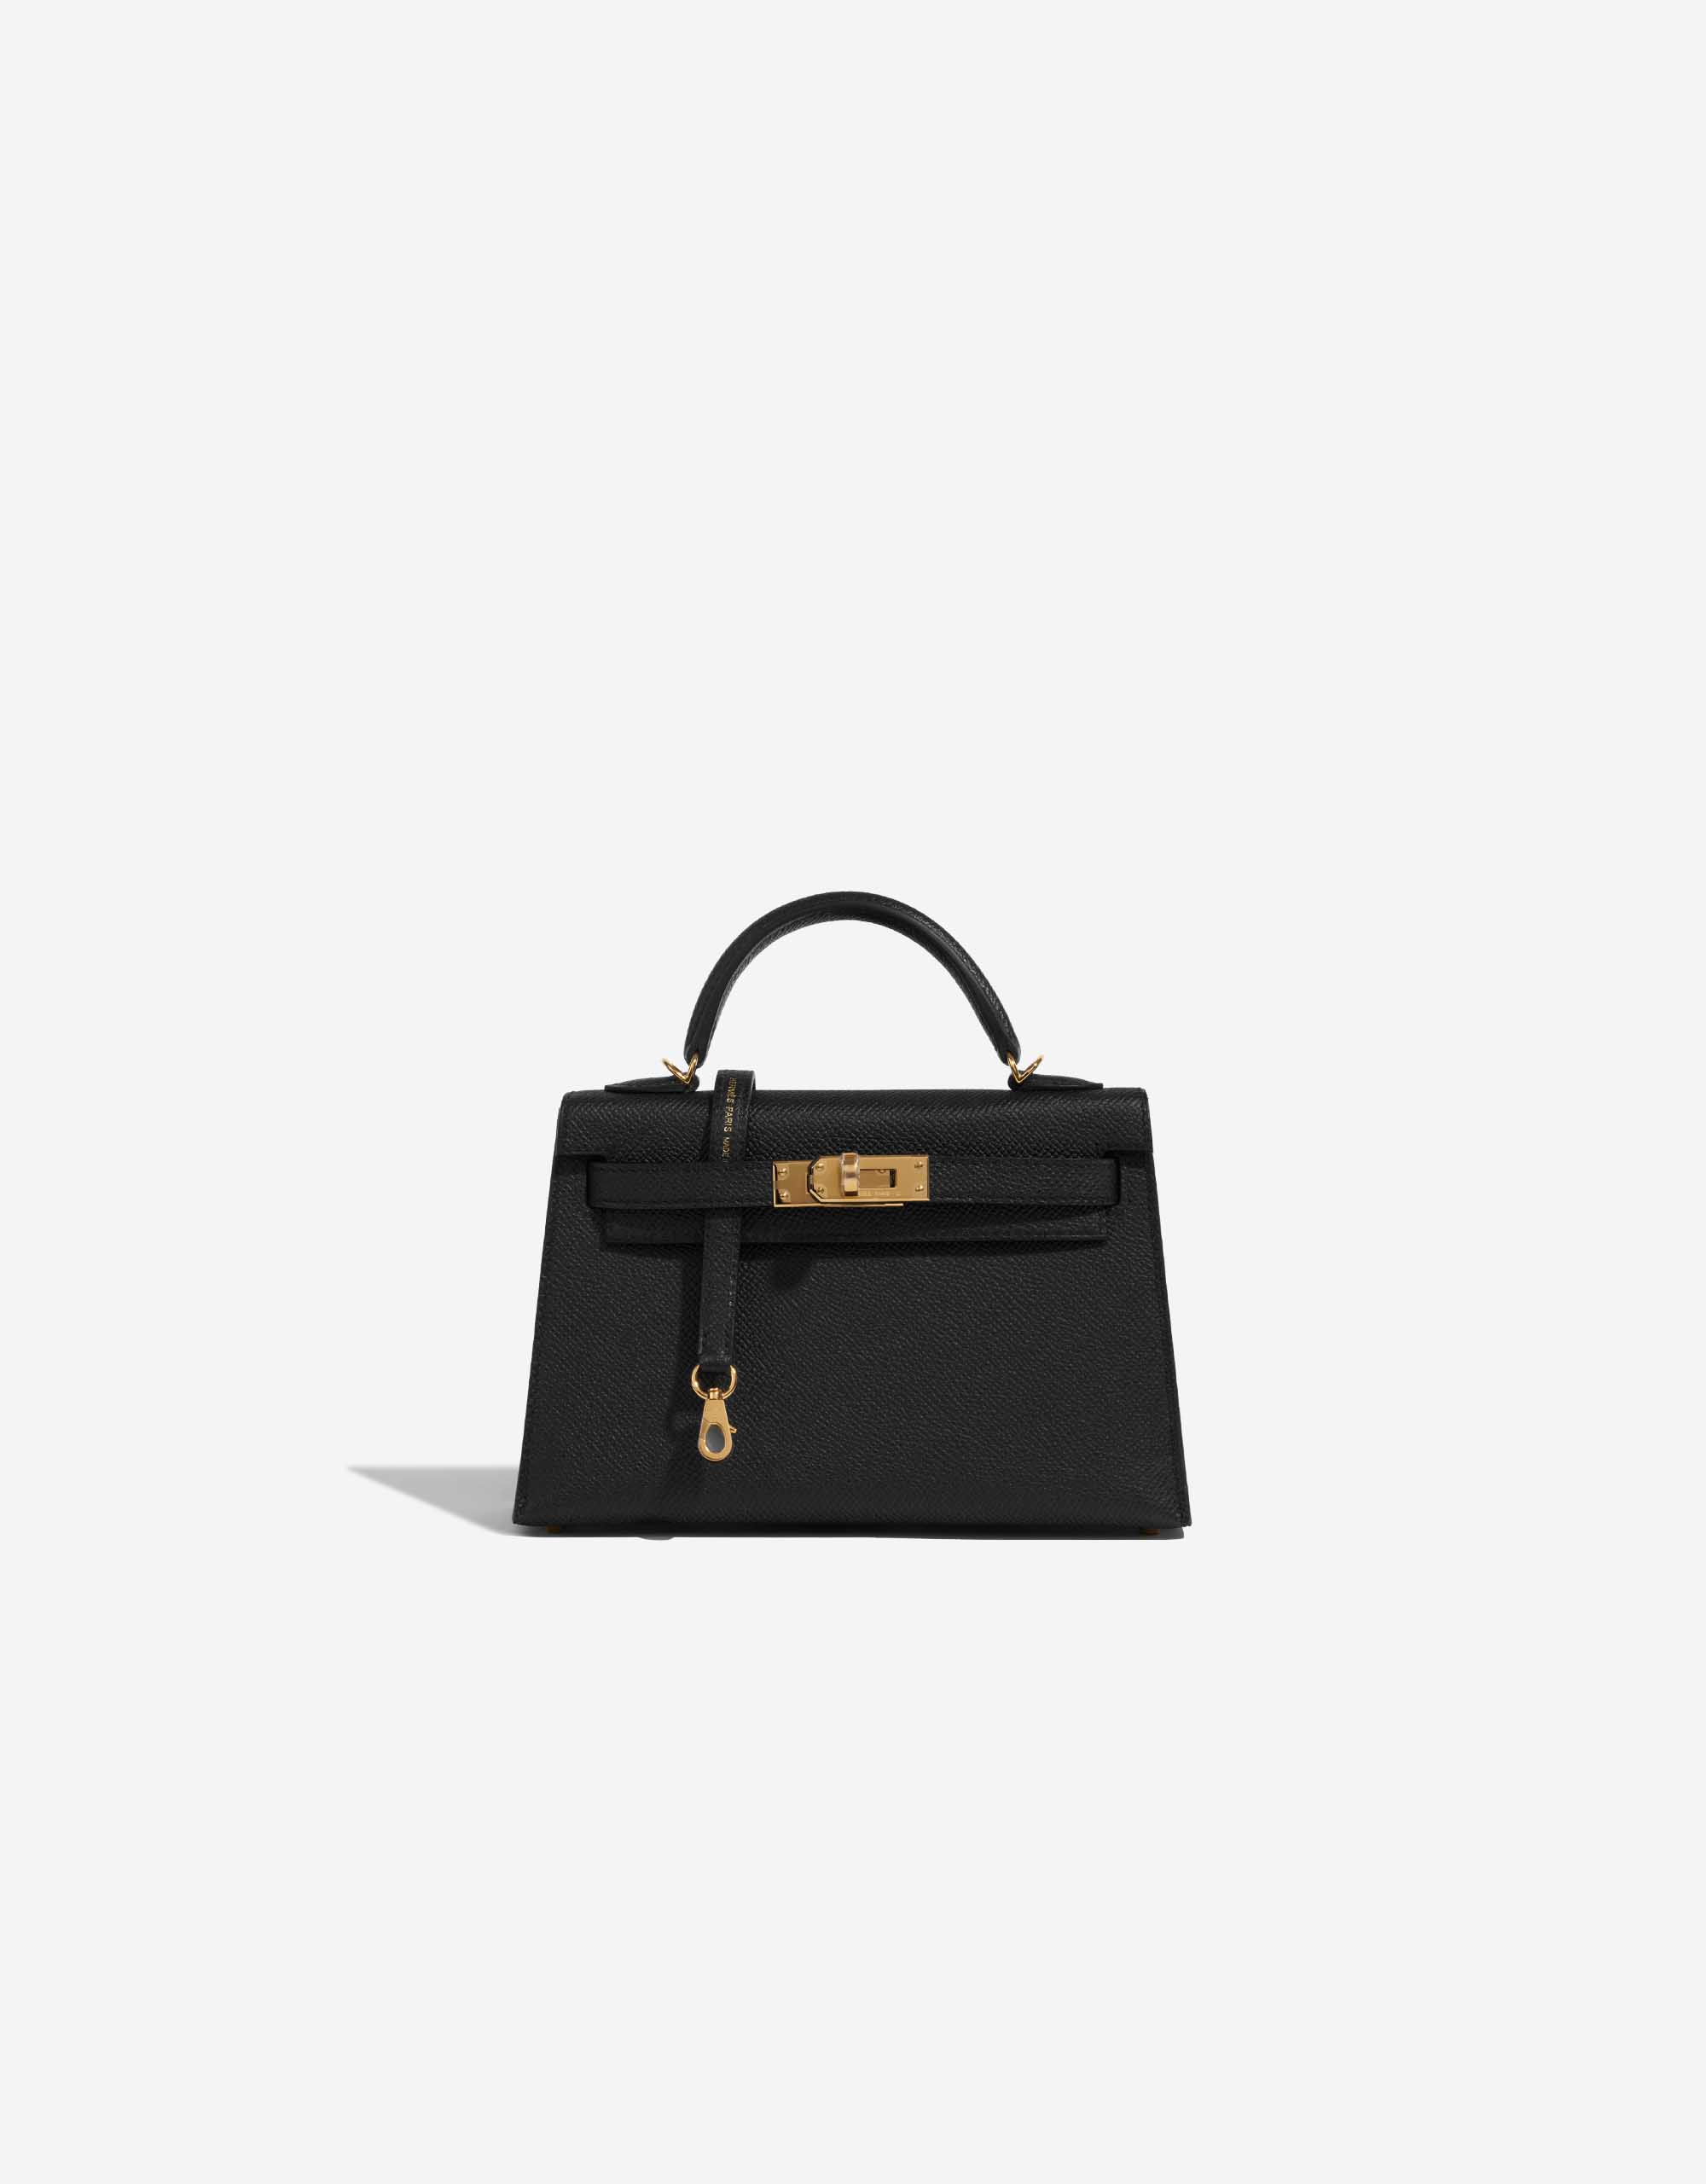 mimmilundblad / chic / minimal / neutral / black / outfit / Hermes Kelly /  bag